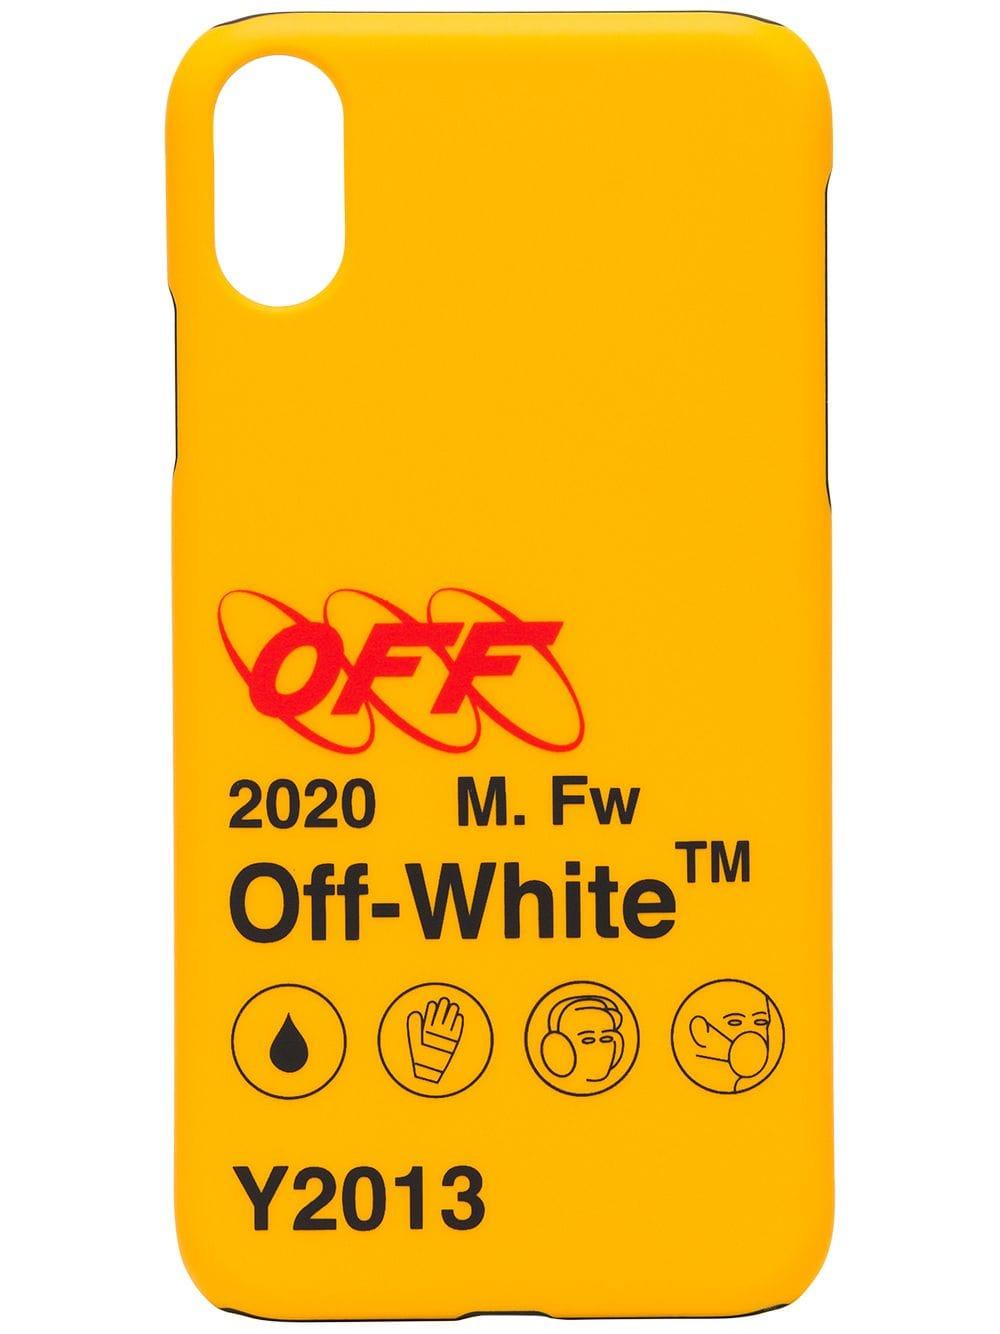 Buy > off white nike phone case xr > in stock